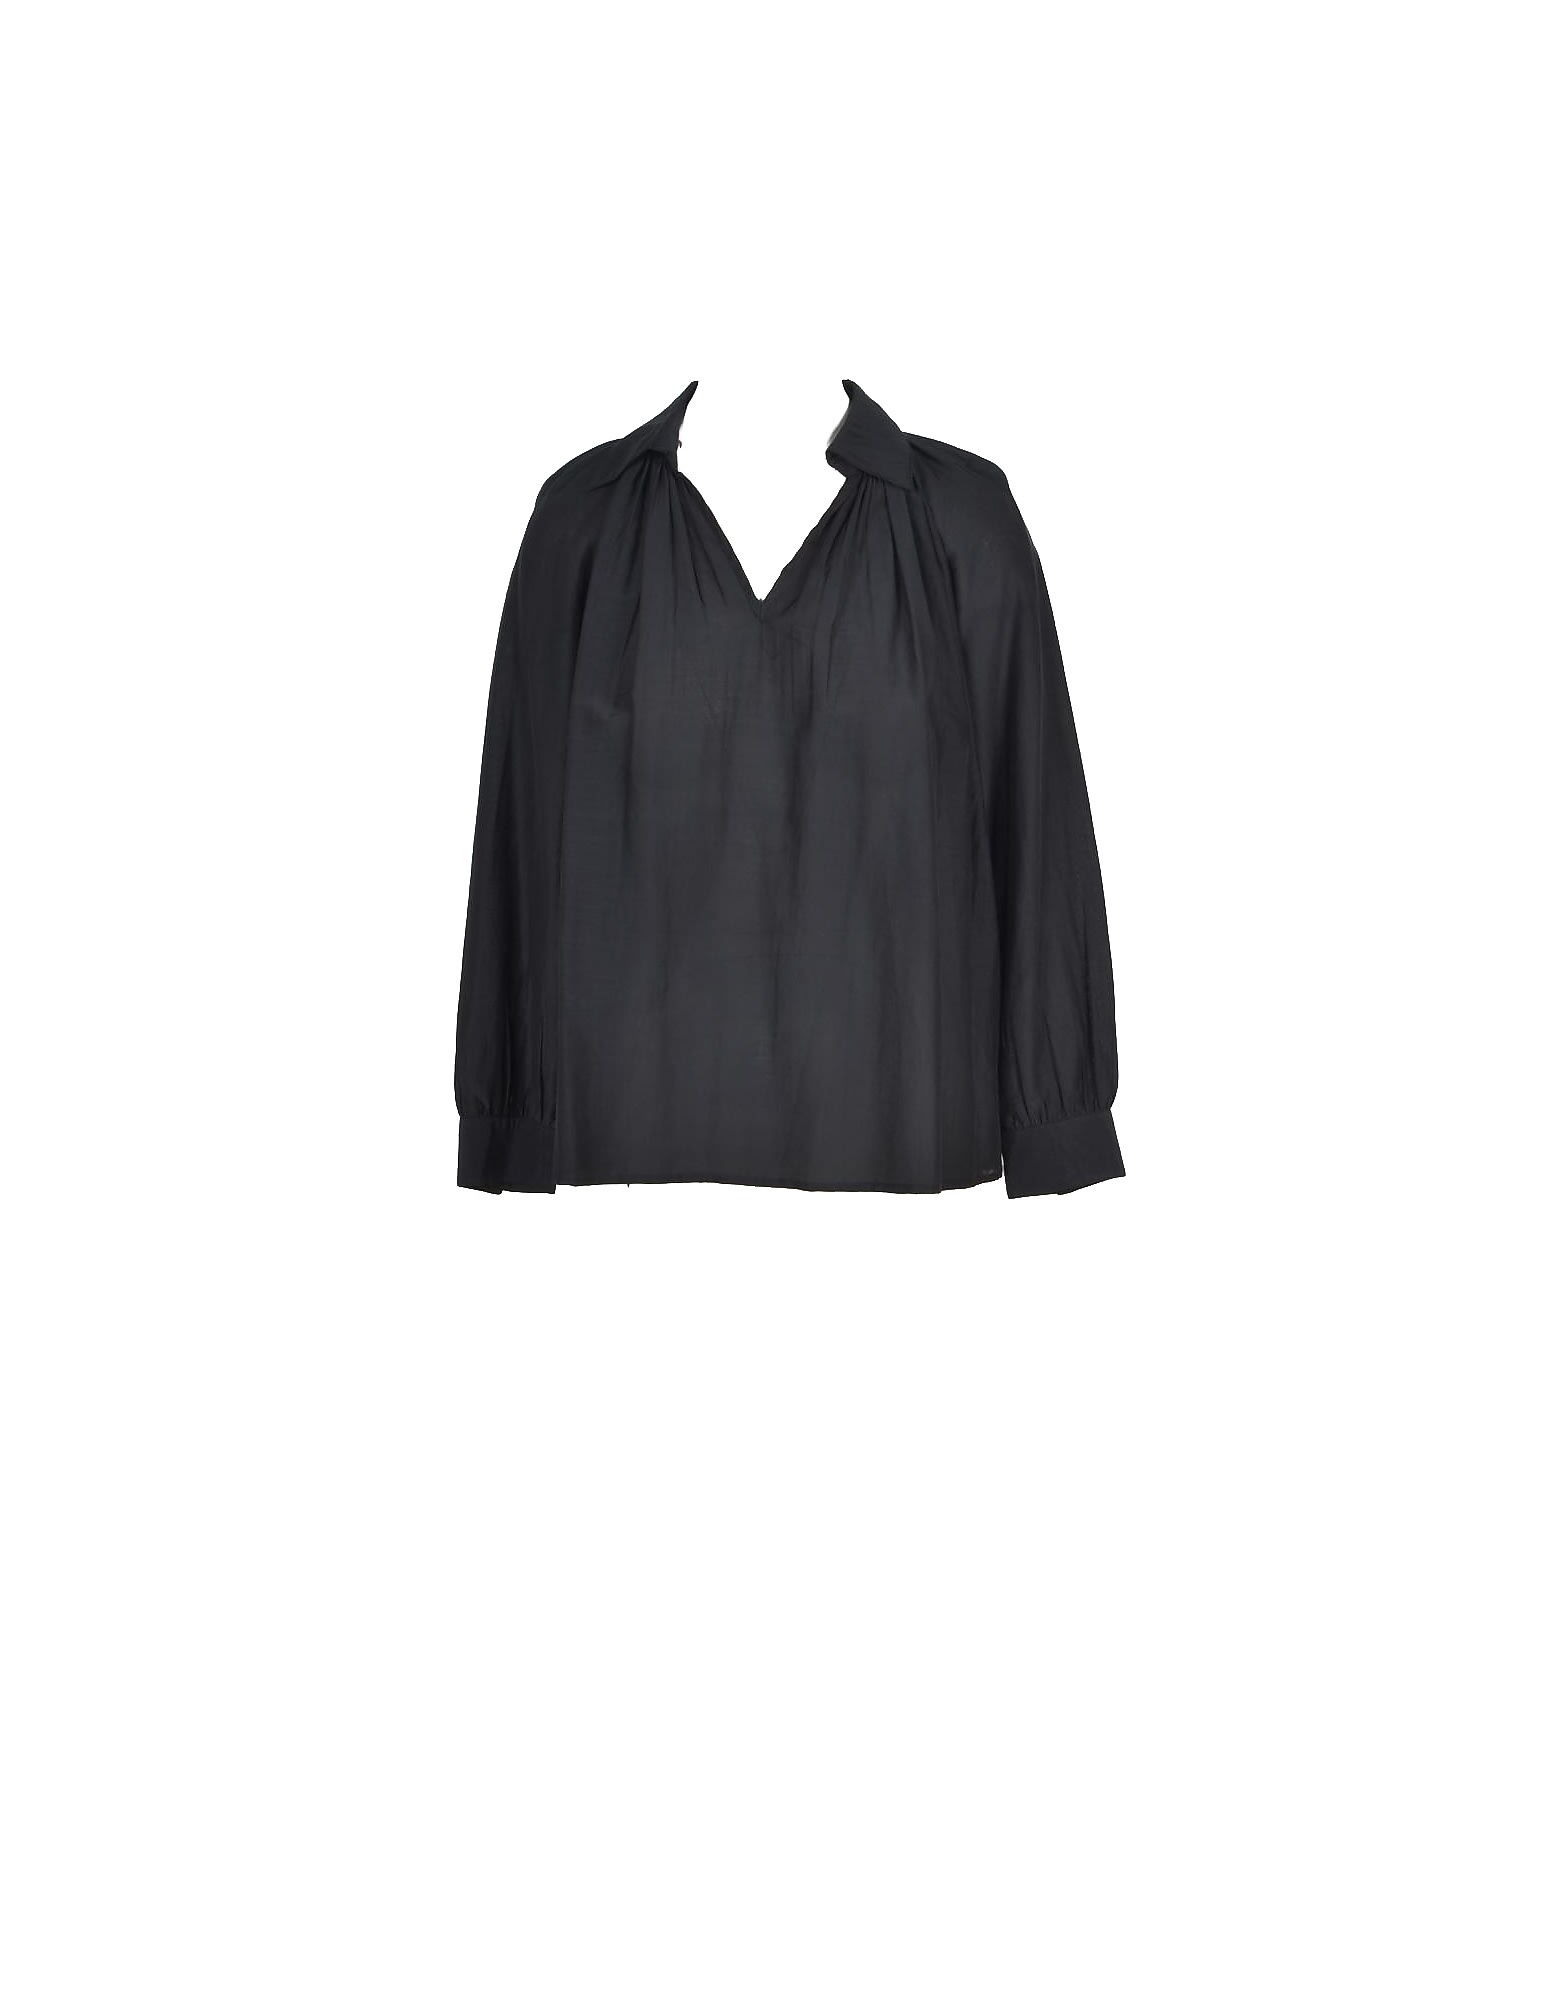 Attic And Barn womens black blouse